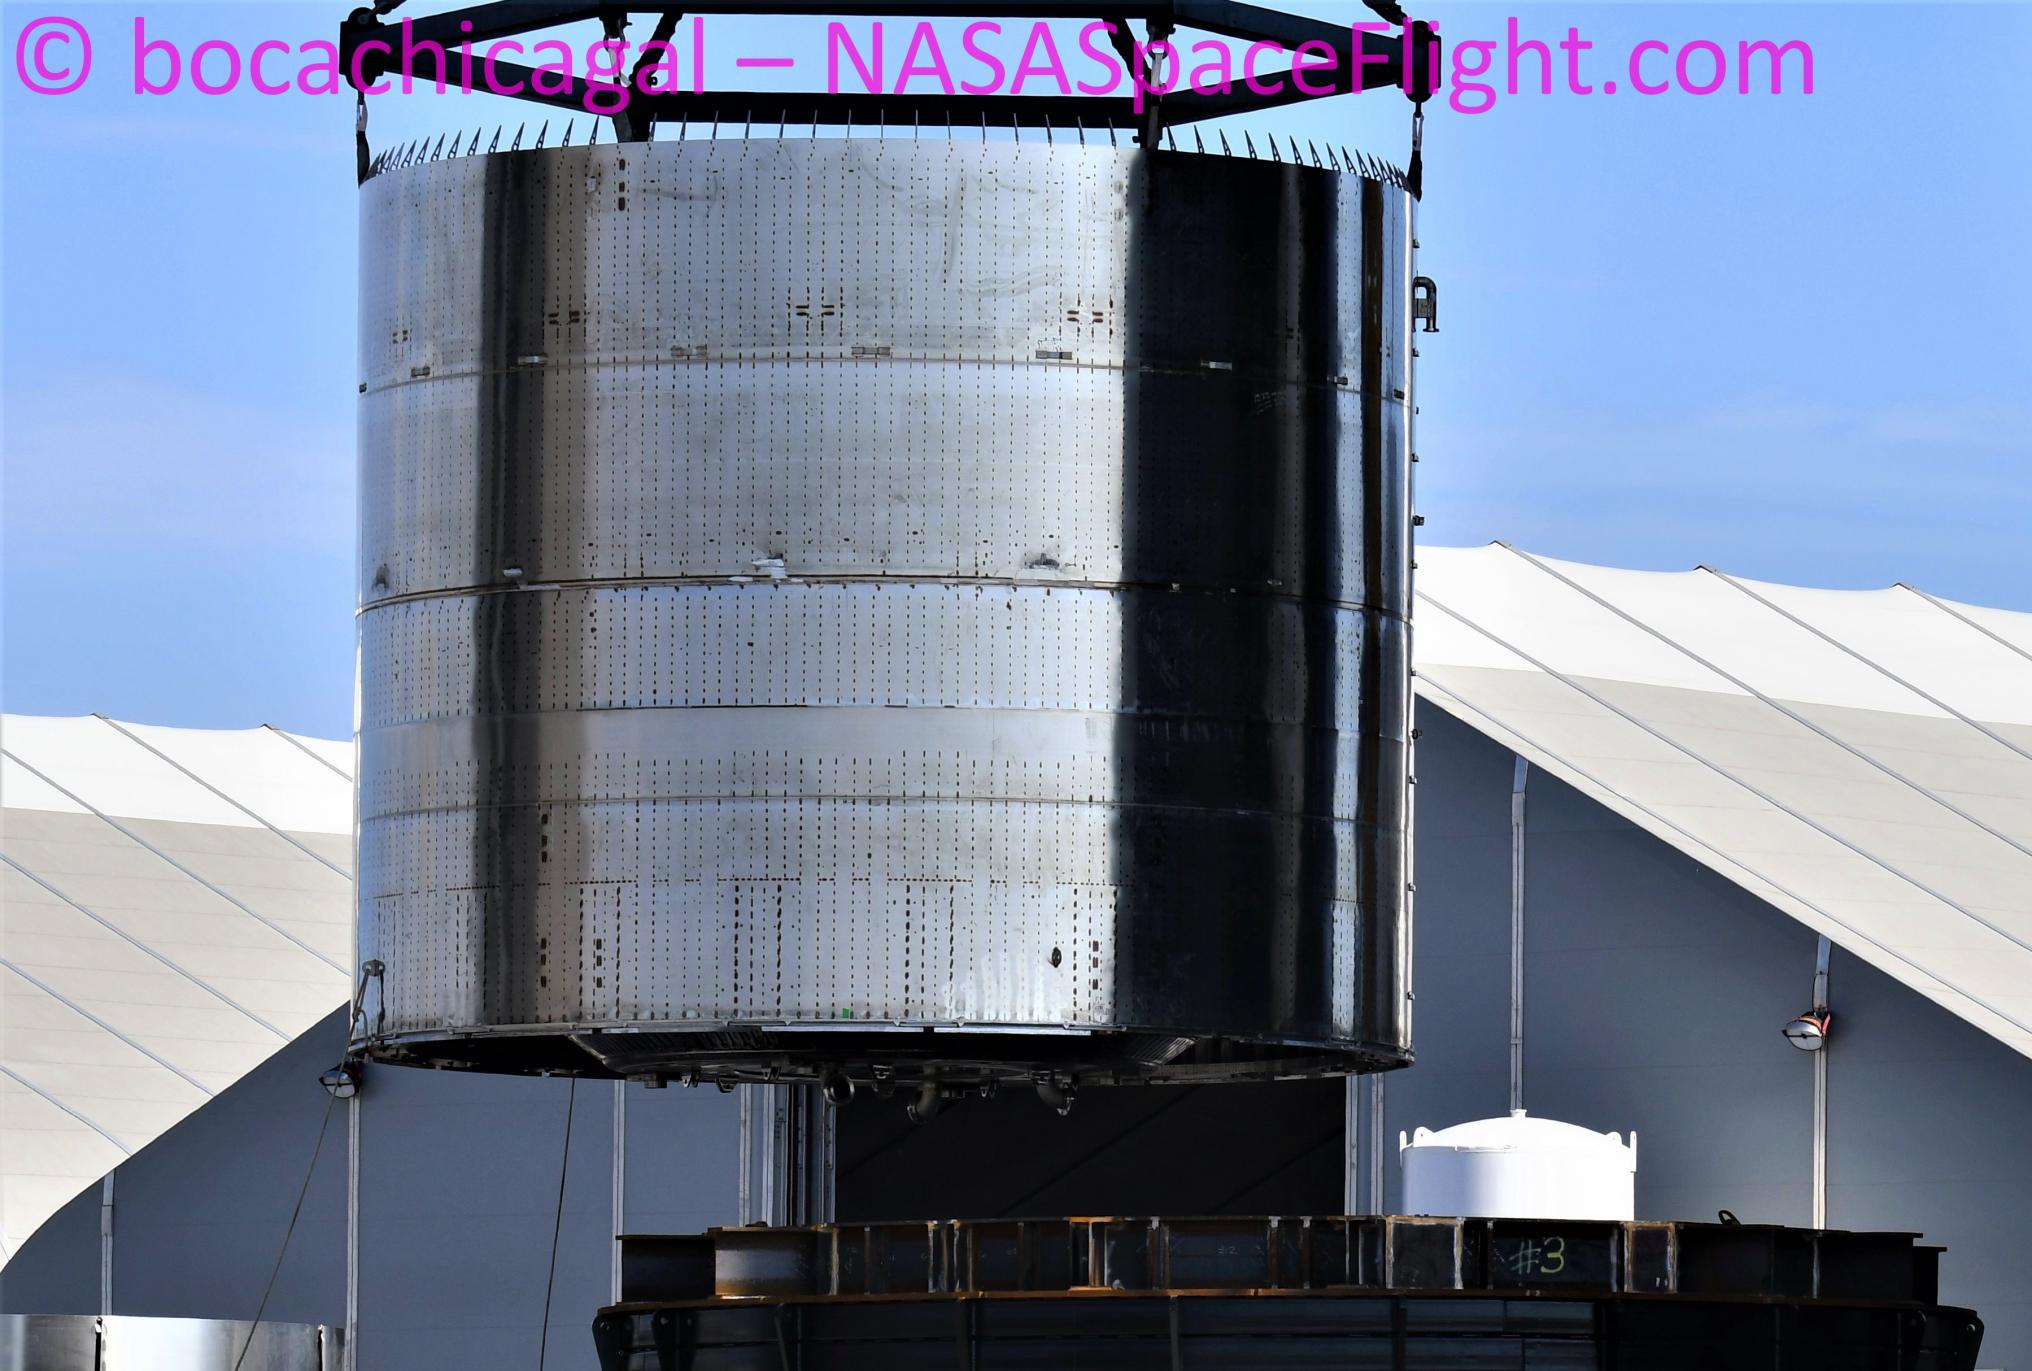 Starship Boca Chica 030721 (NASASpaceflight – bocachicagal) BN1 engine section stack prep 2 crop 2 (c)